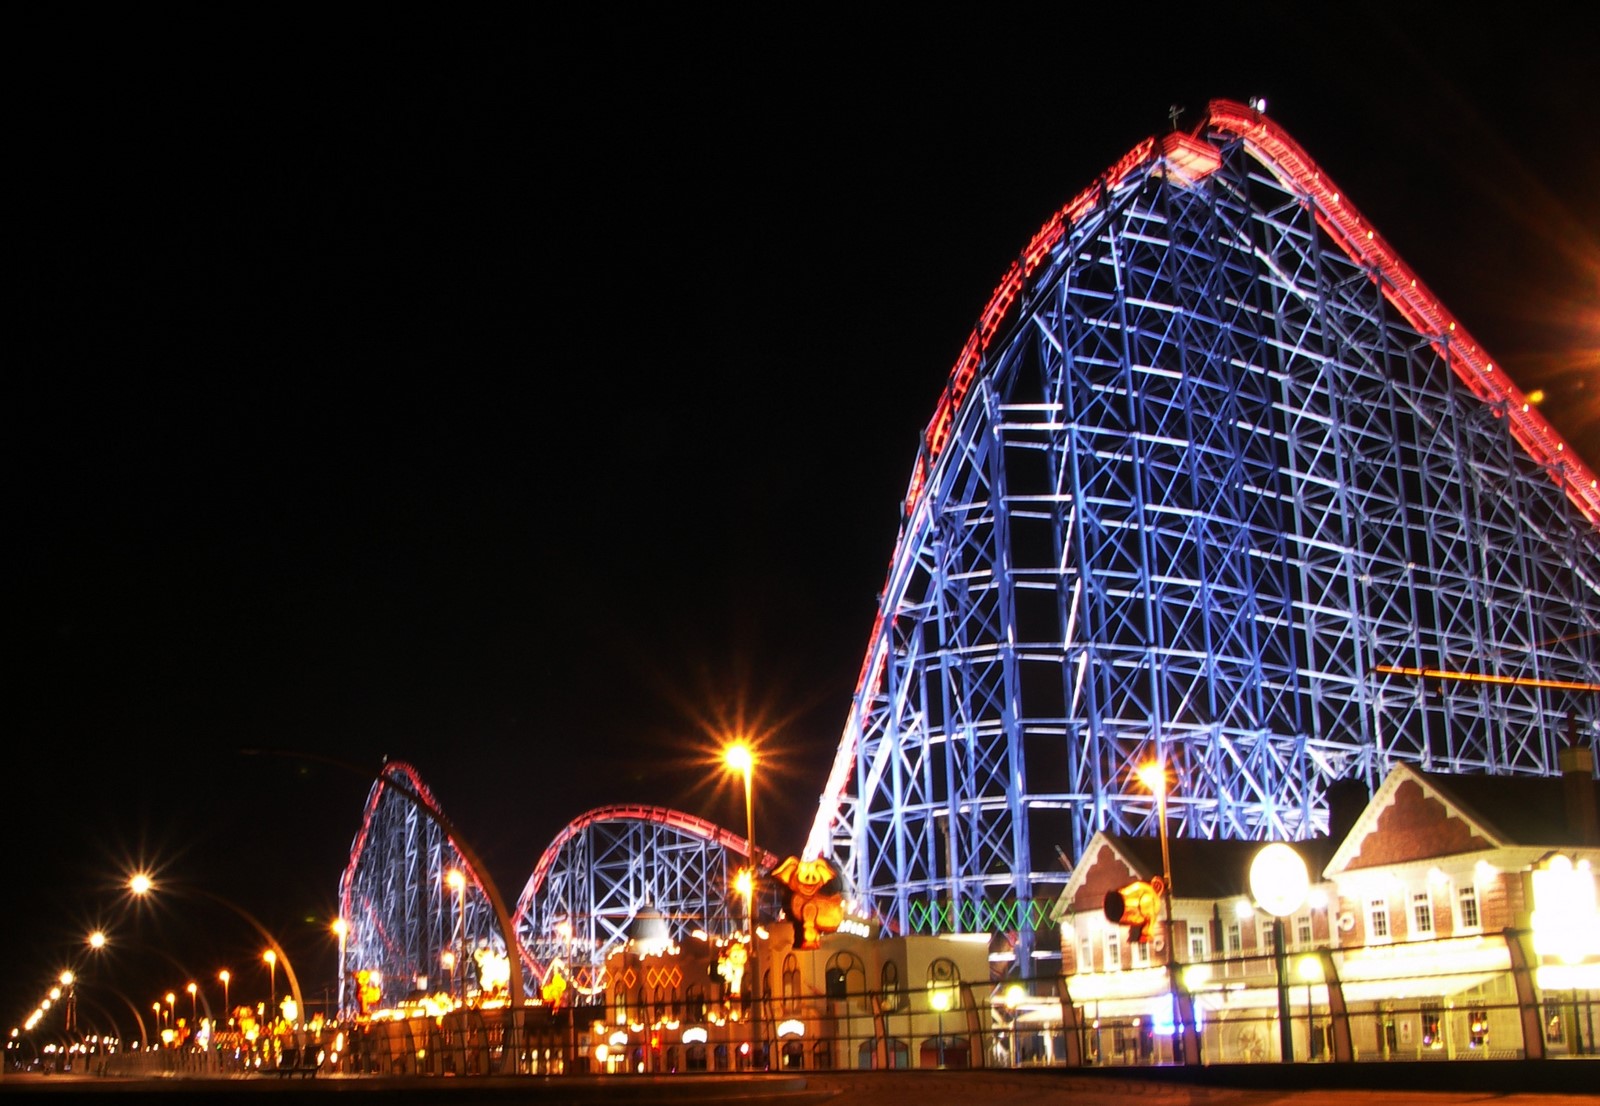 The Big One, Blackpool, Lancashire, at night